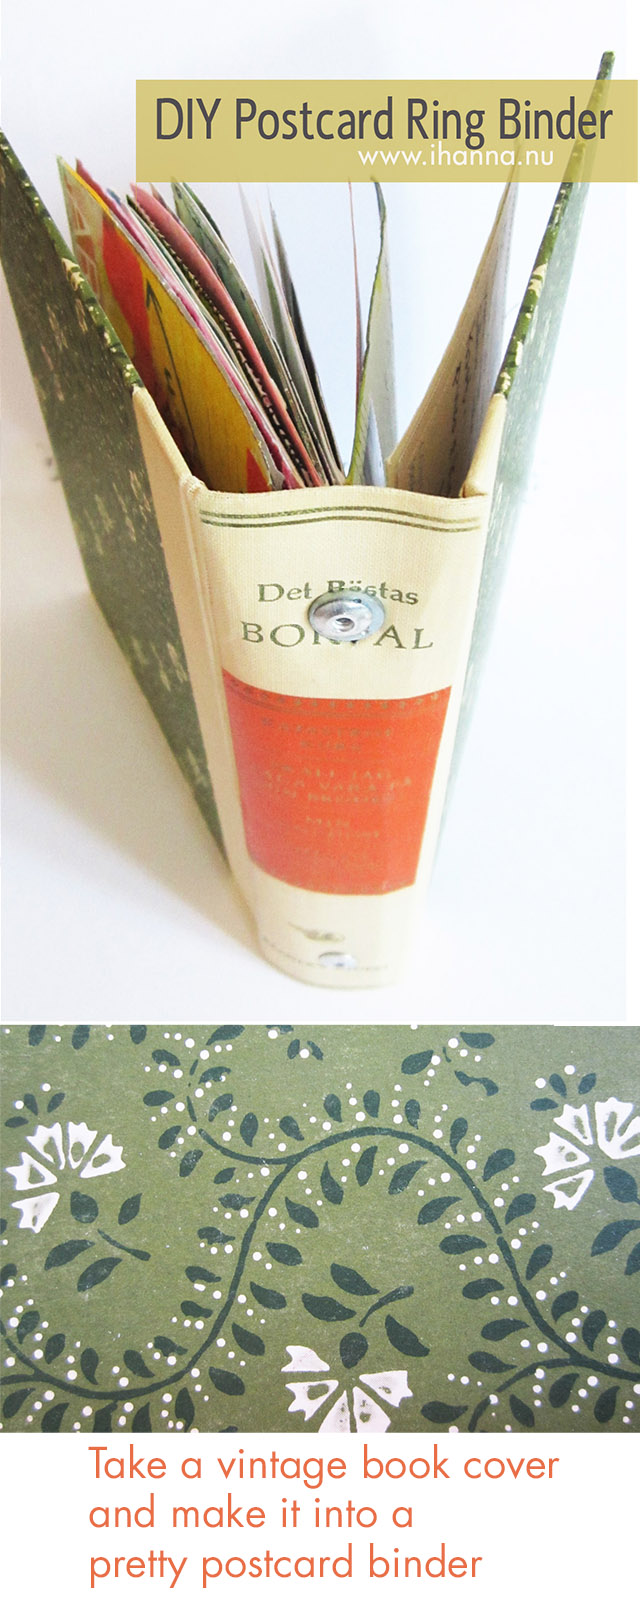 Creative Idea: Take a vintage book cover and make a pretty postcard binder - more info at www.ihanna.nu